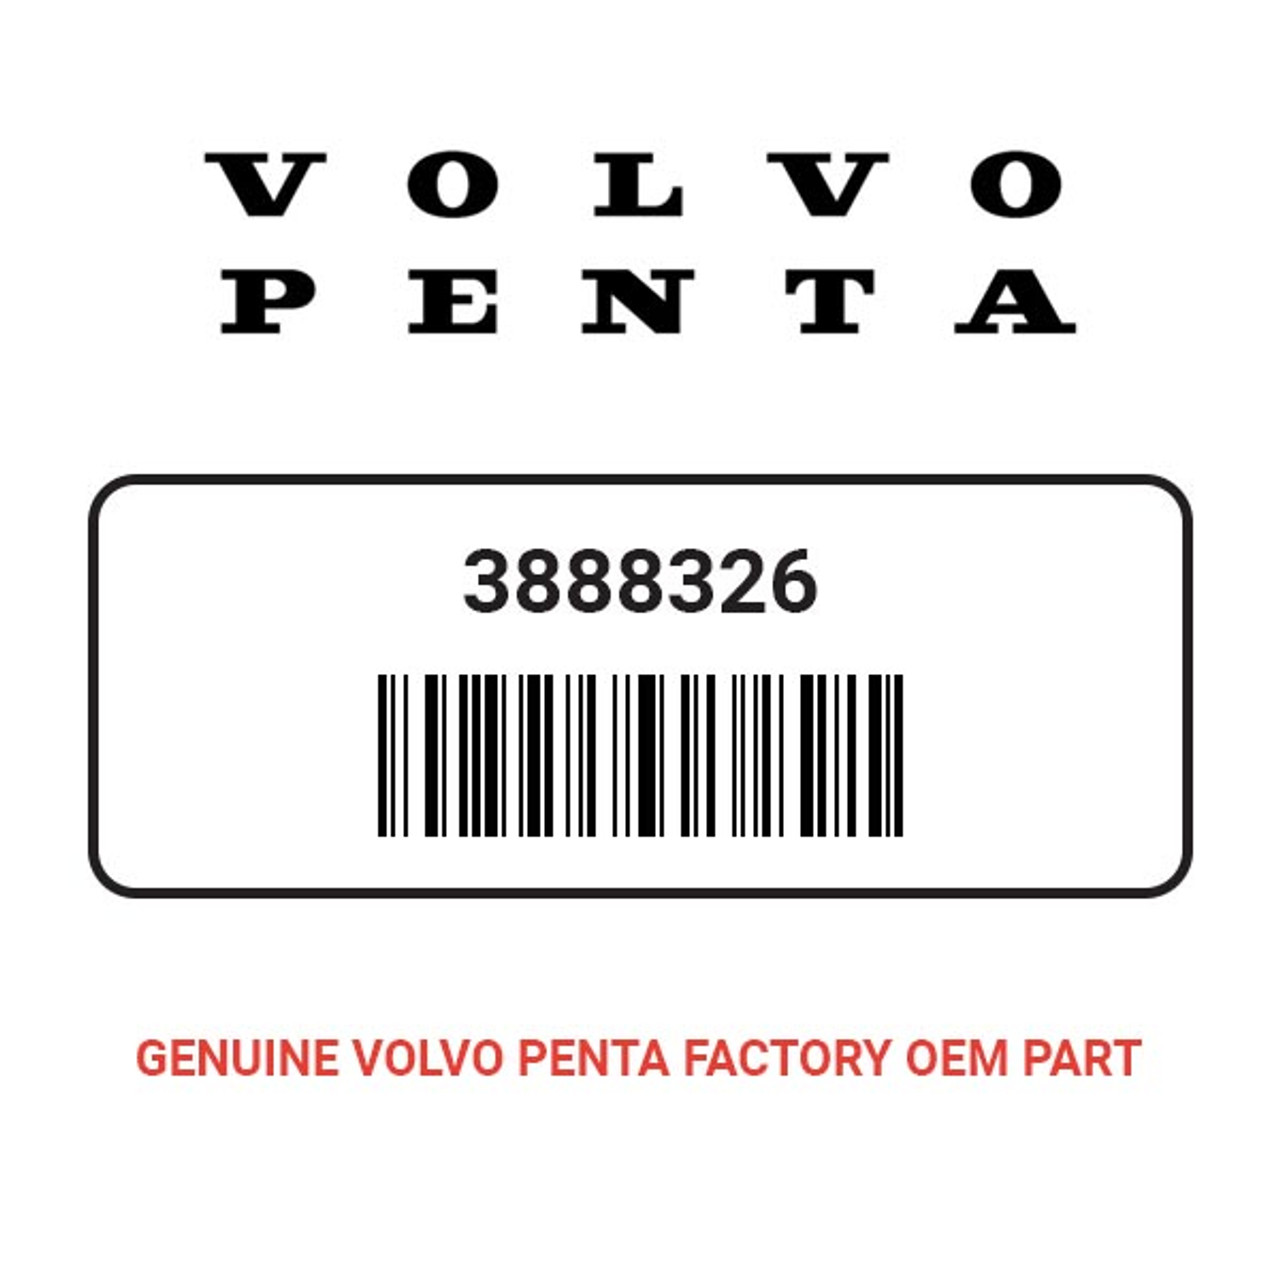 Volvo Penta 3888326 Ignition Cable Kit Wholesale Marine